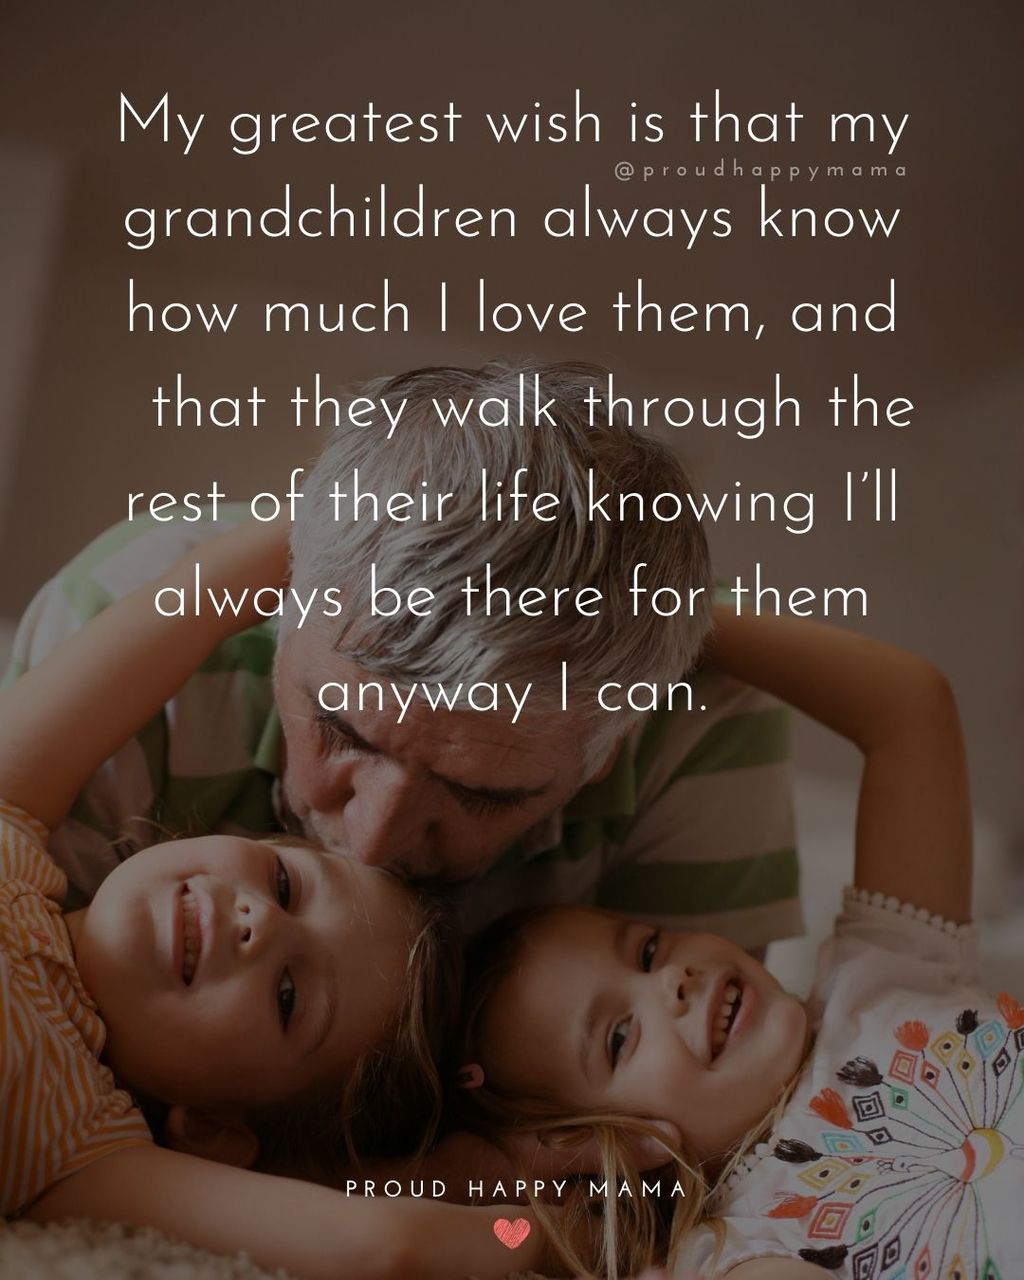 Quotes for Grandchildren - My greatest wish is that my grandchildren always know how much I love them